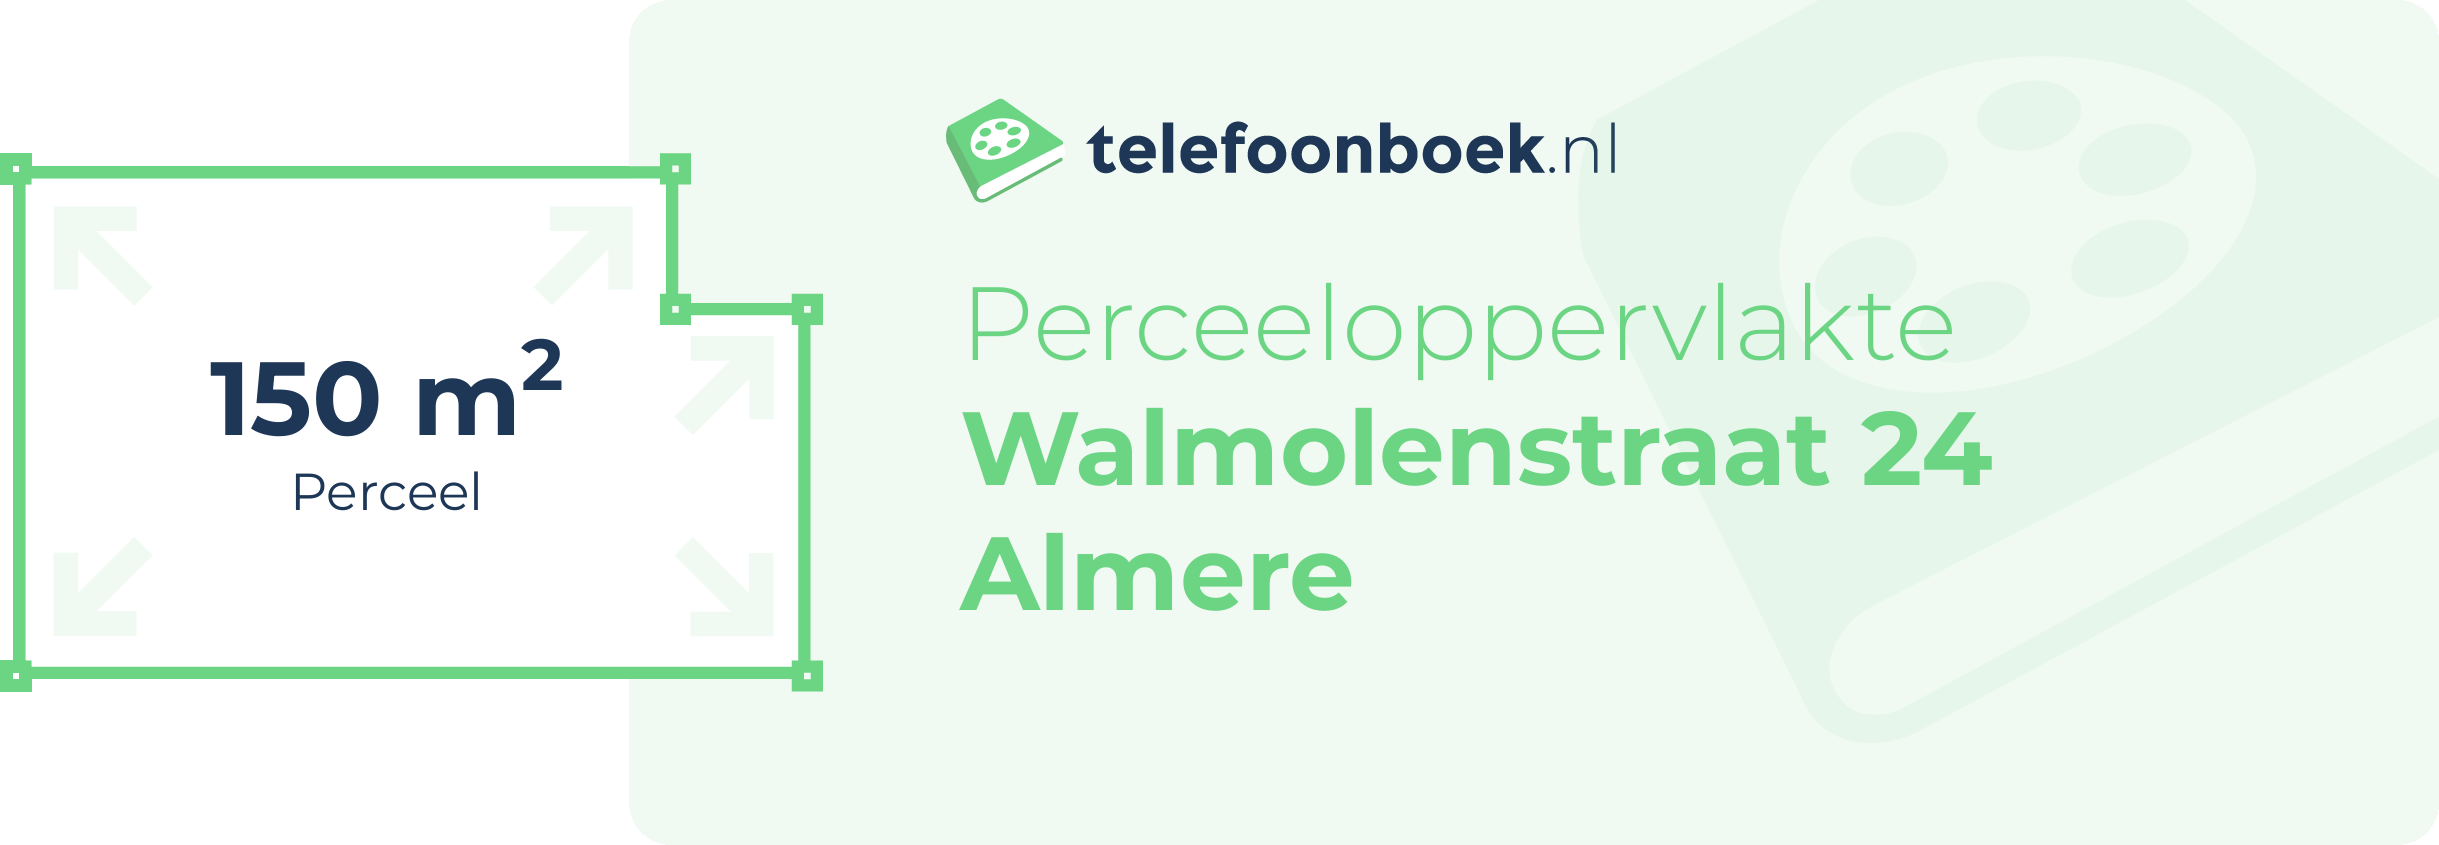 Perceeloppervlakte Walmolenstraat 24 Almere